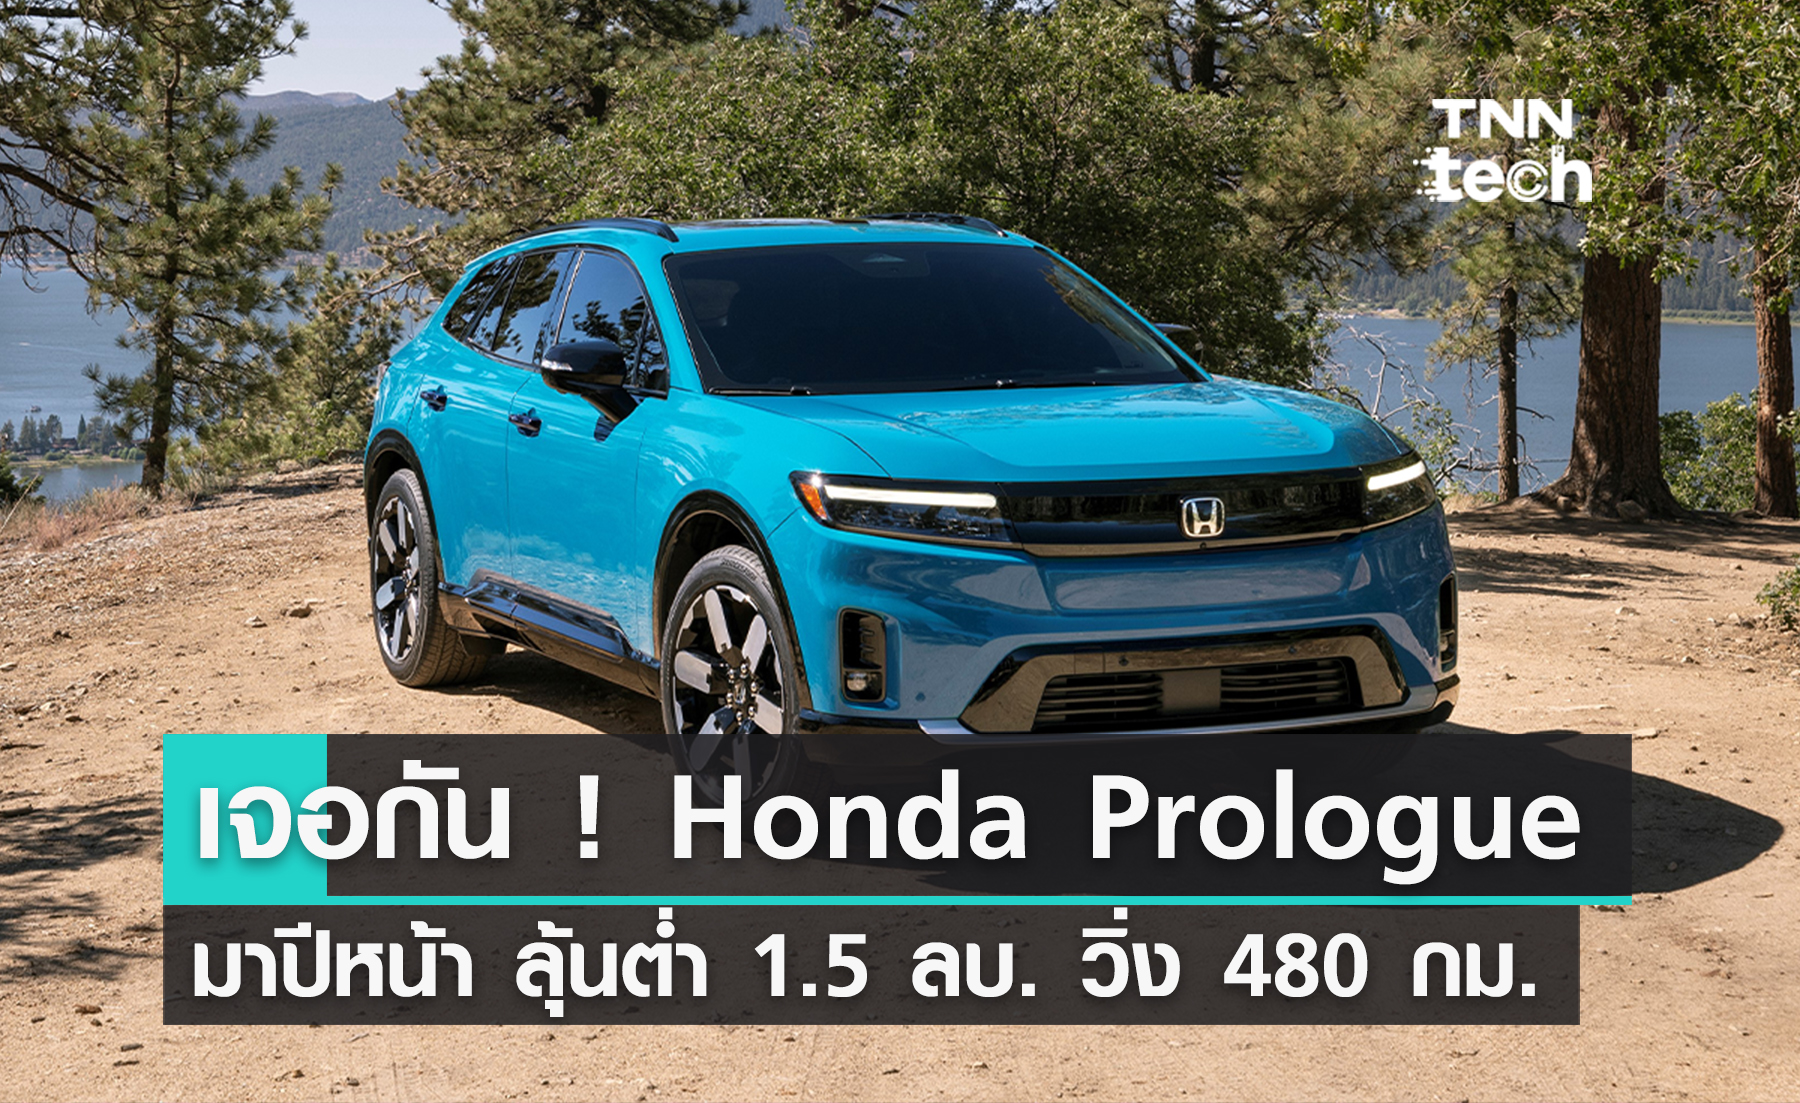 Honda Prologue รถ SUV ไฟฟ้าคันแรกของฮอนด้า ปีหน้ามาแน่  ลุ้นราคาต่ำ 1.5 ล้านบาท